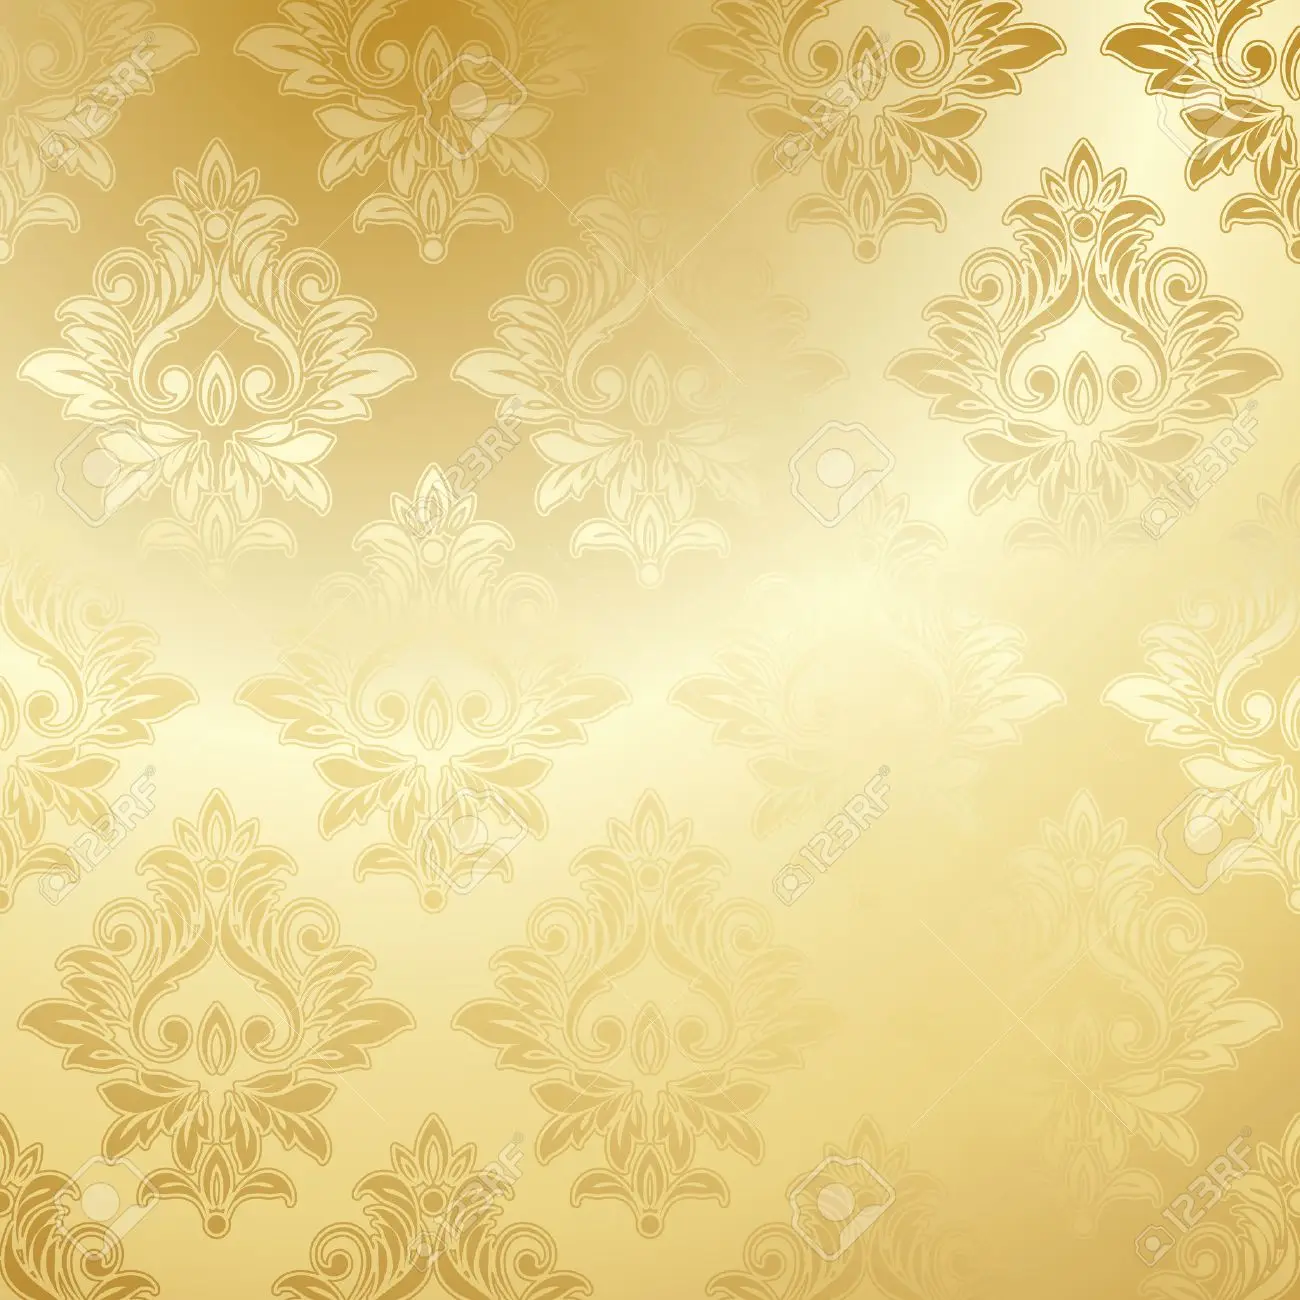 Download Free 100 + golden pattern wallpaper